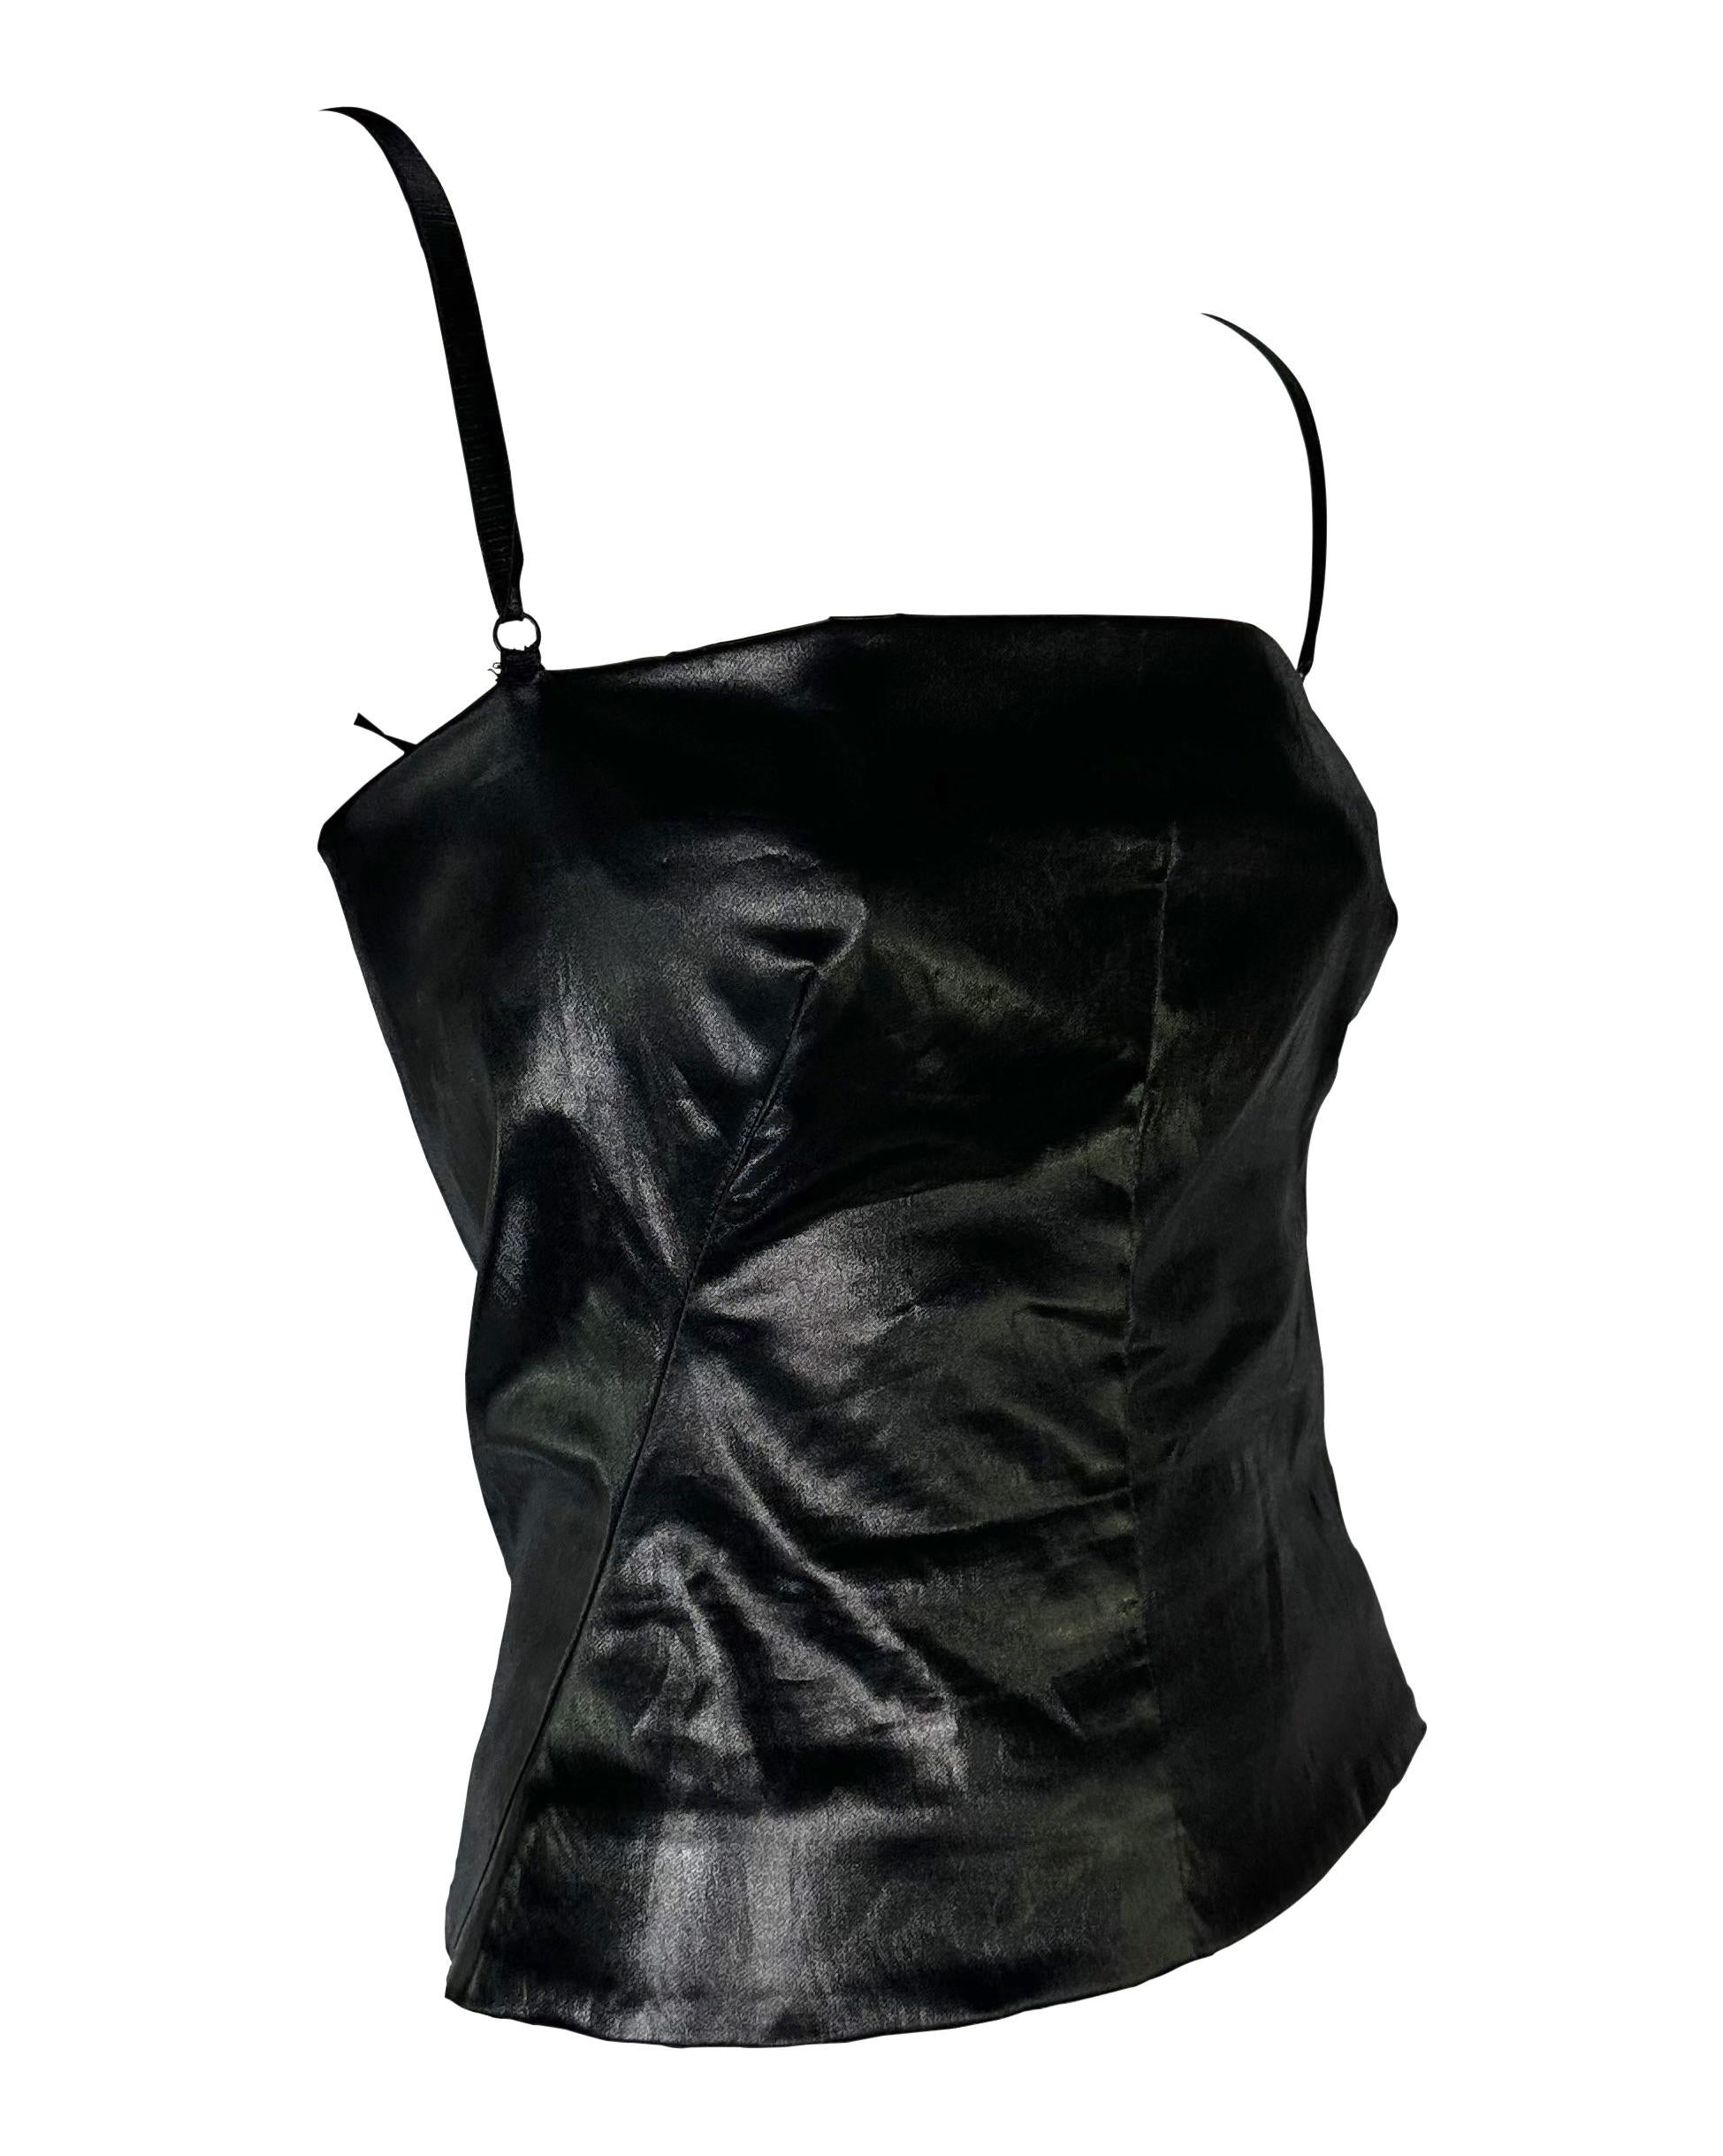 S/S 1999 Dolce & Gabbana Runway Wet Look Black Stretch Bustier Bra Crop Top For Sale 2